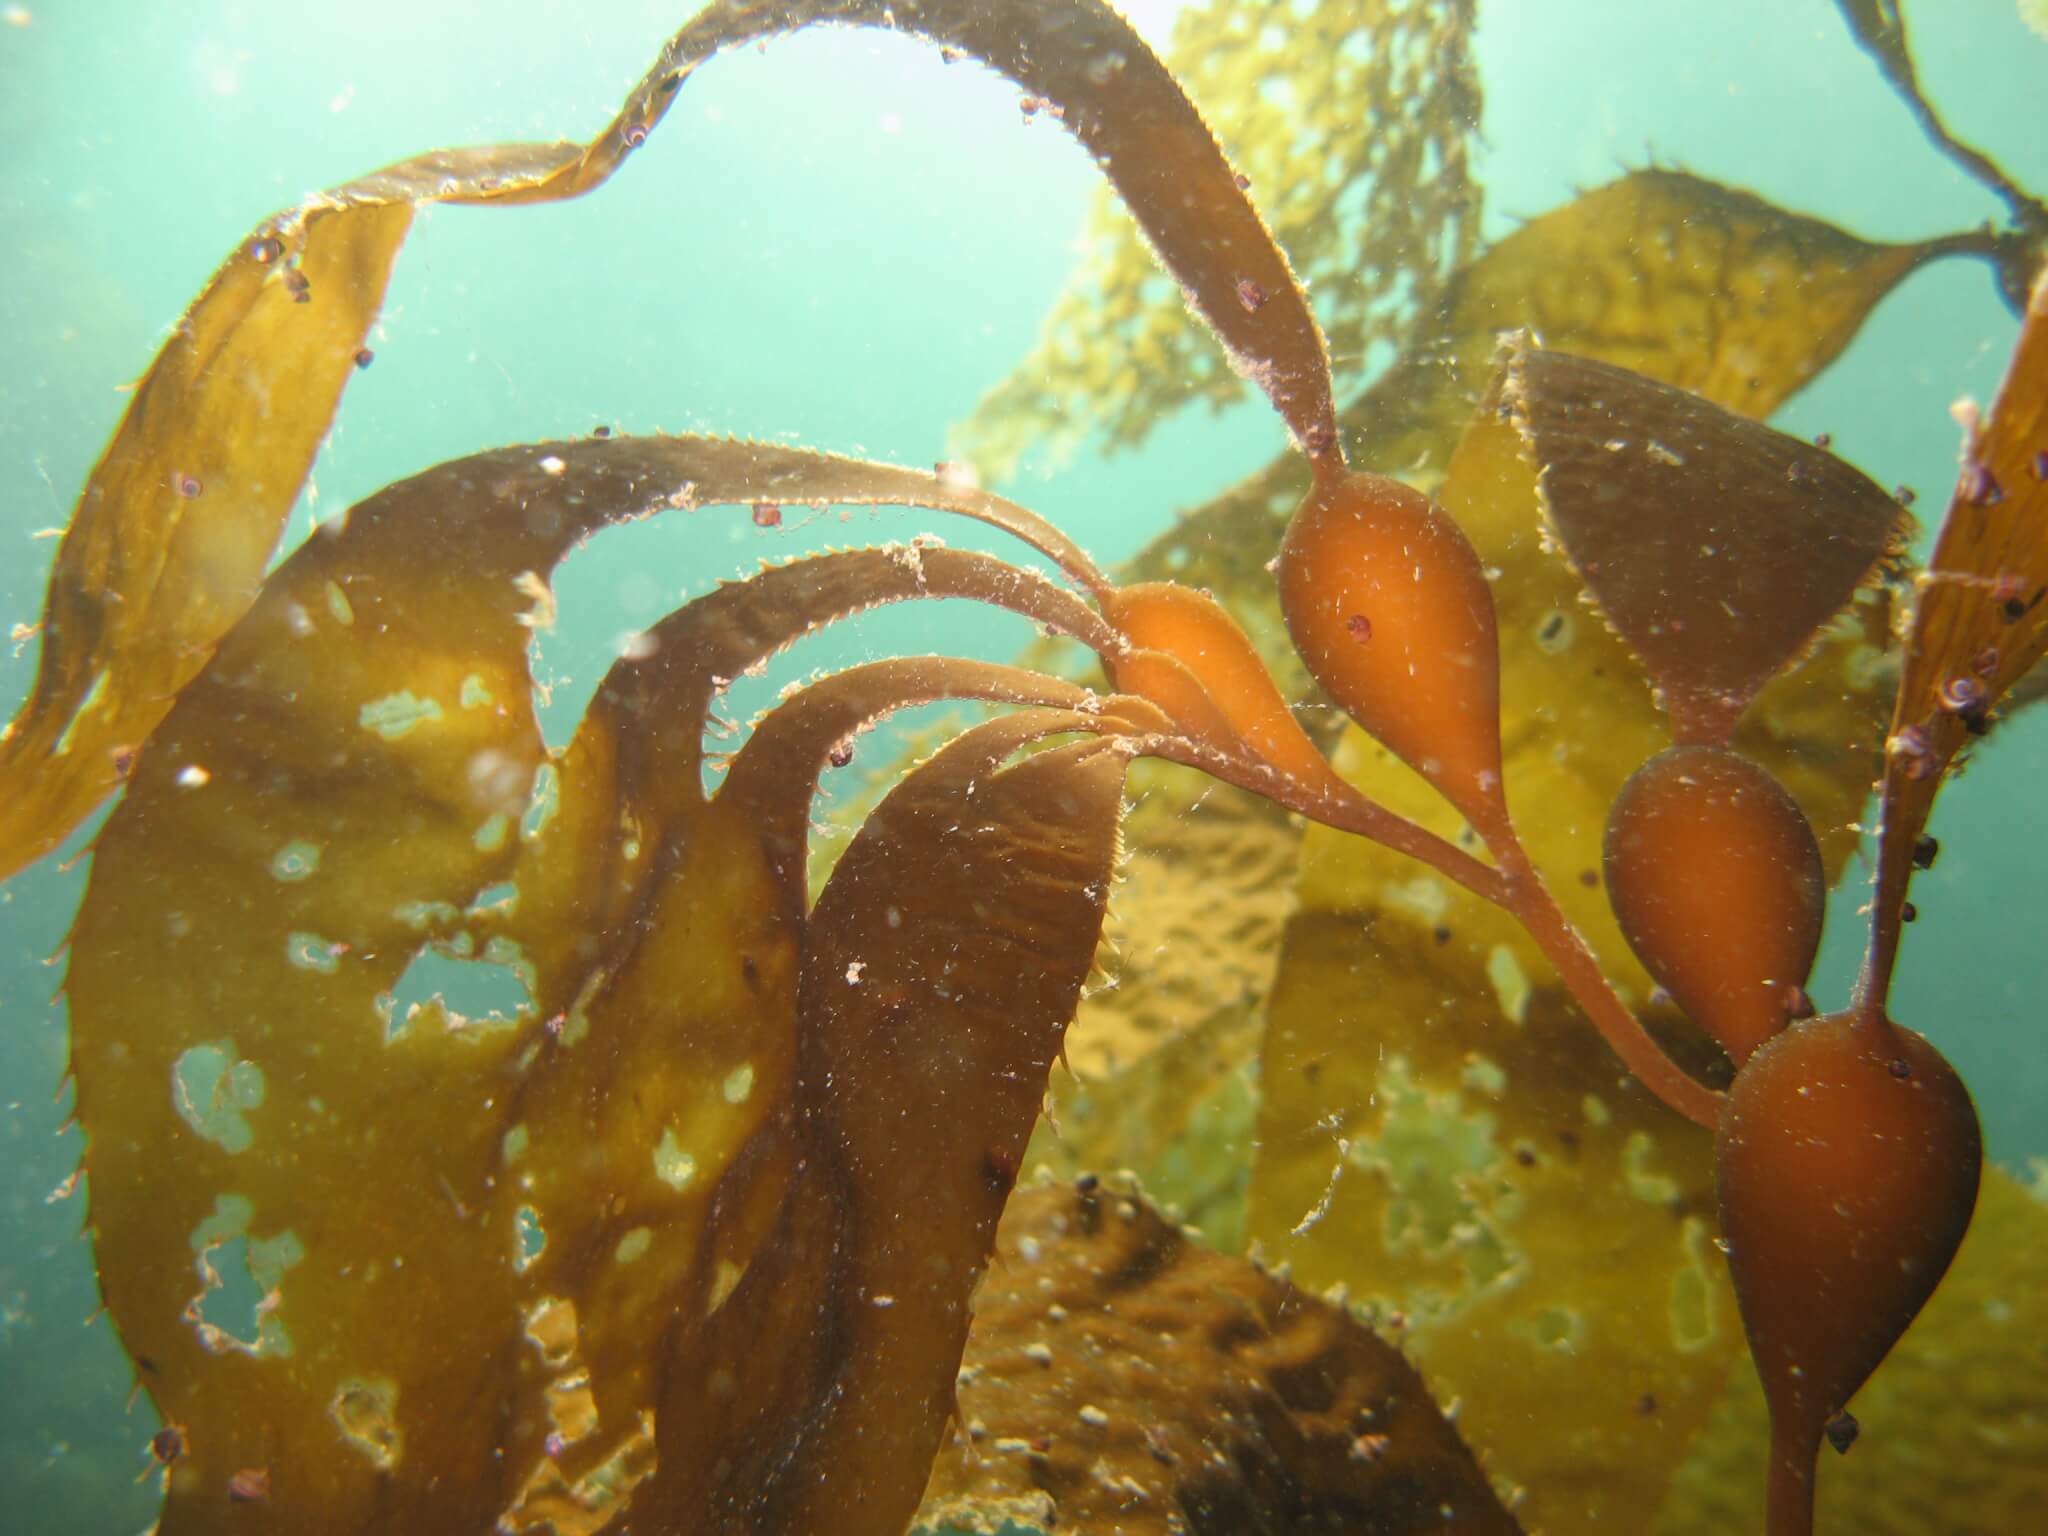 Macrocystis (giant) kelp